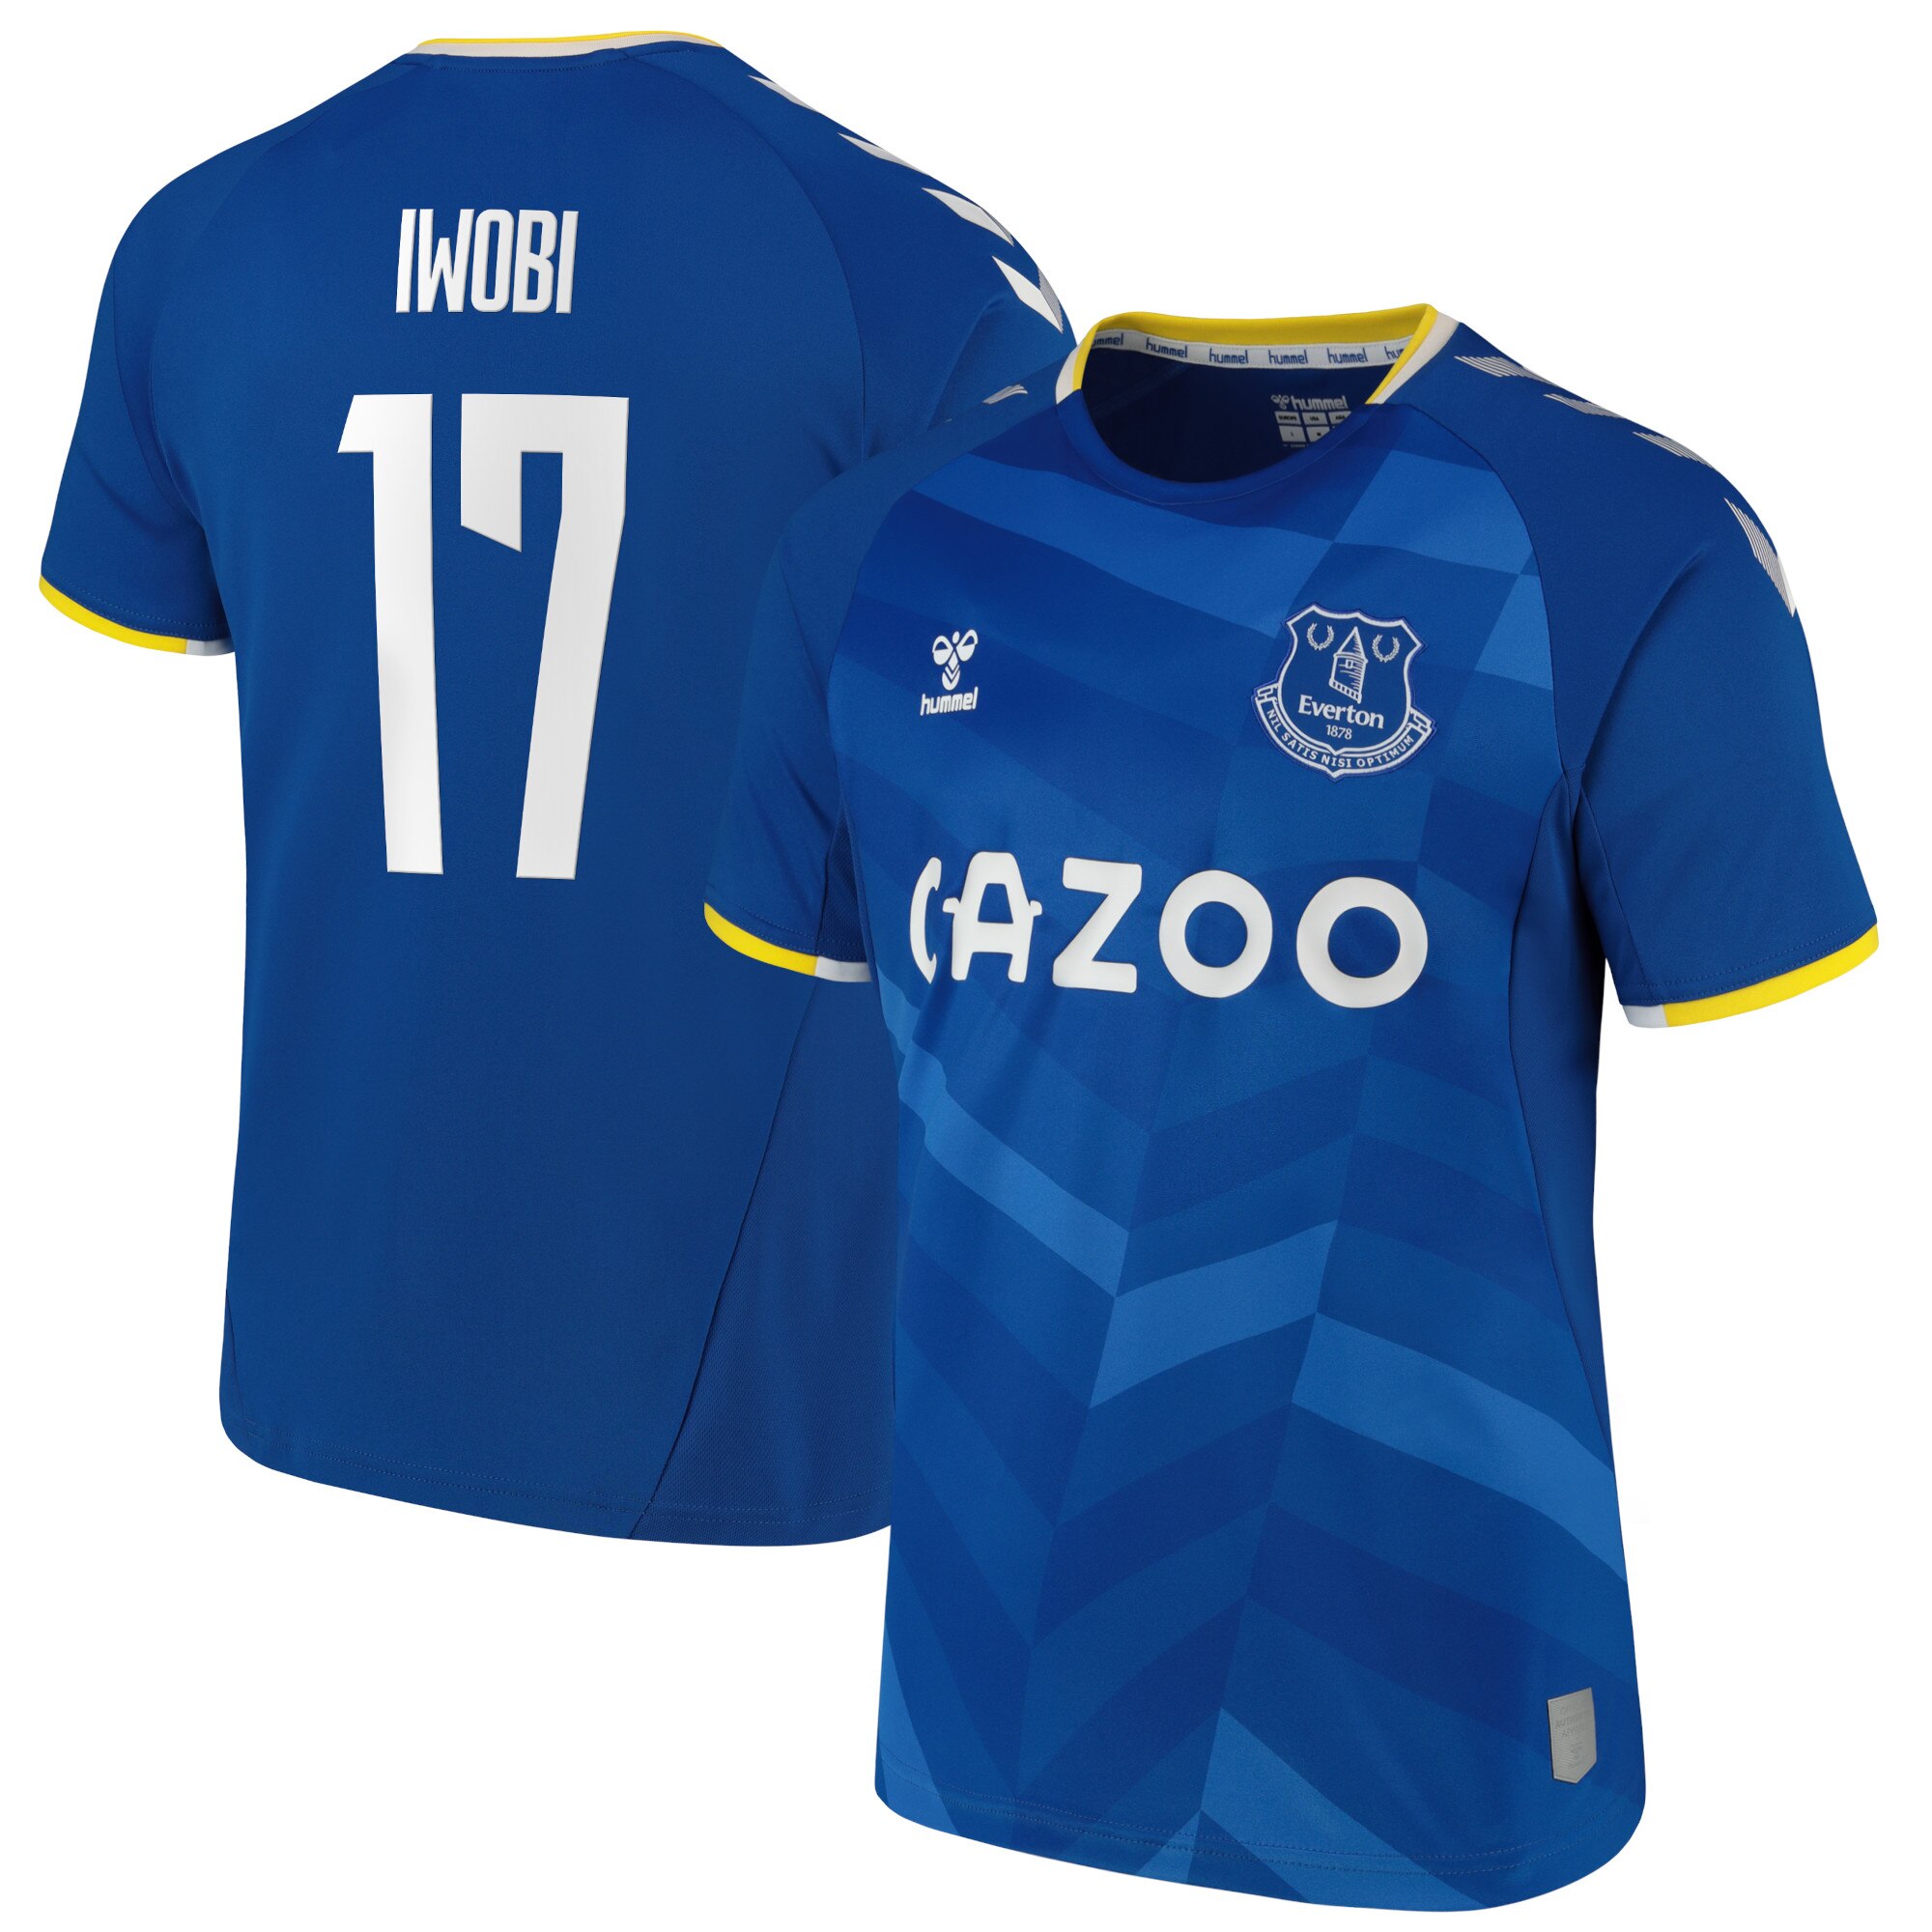 Everton Cup Home Shirt - 2021-22 with Iwobi 17 printing